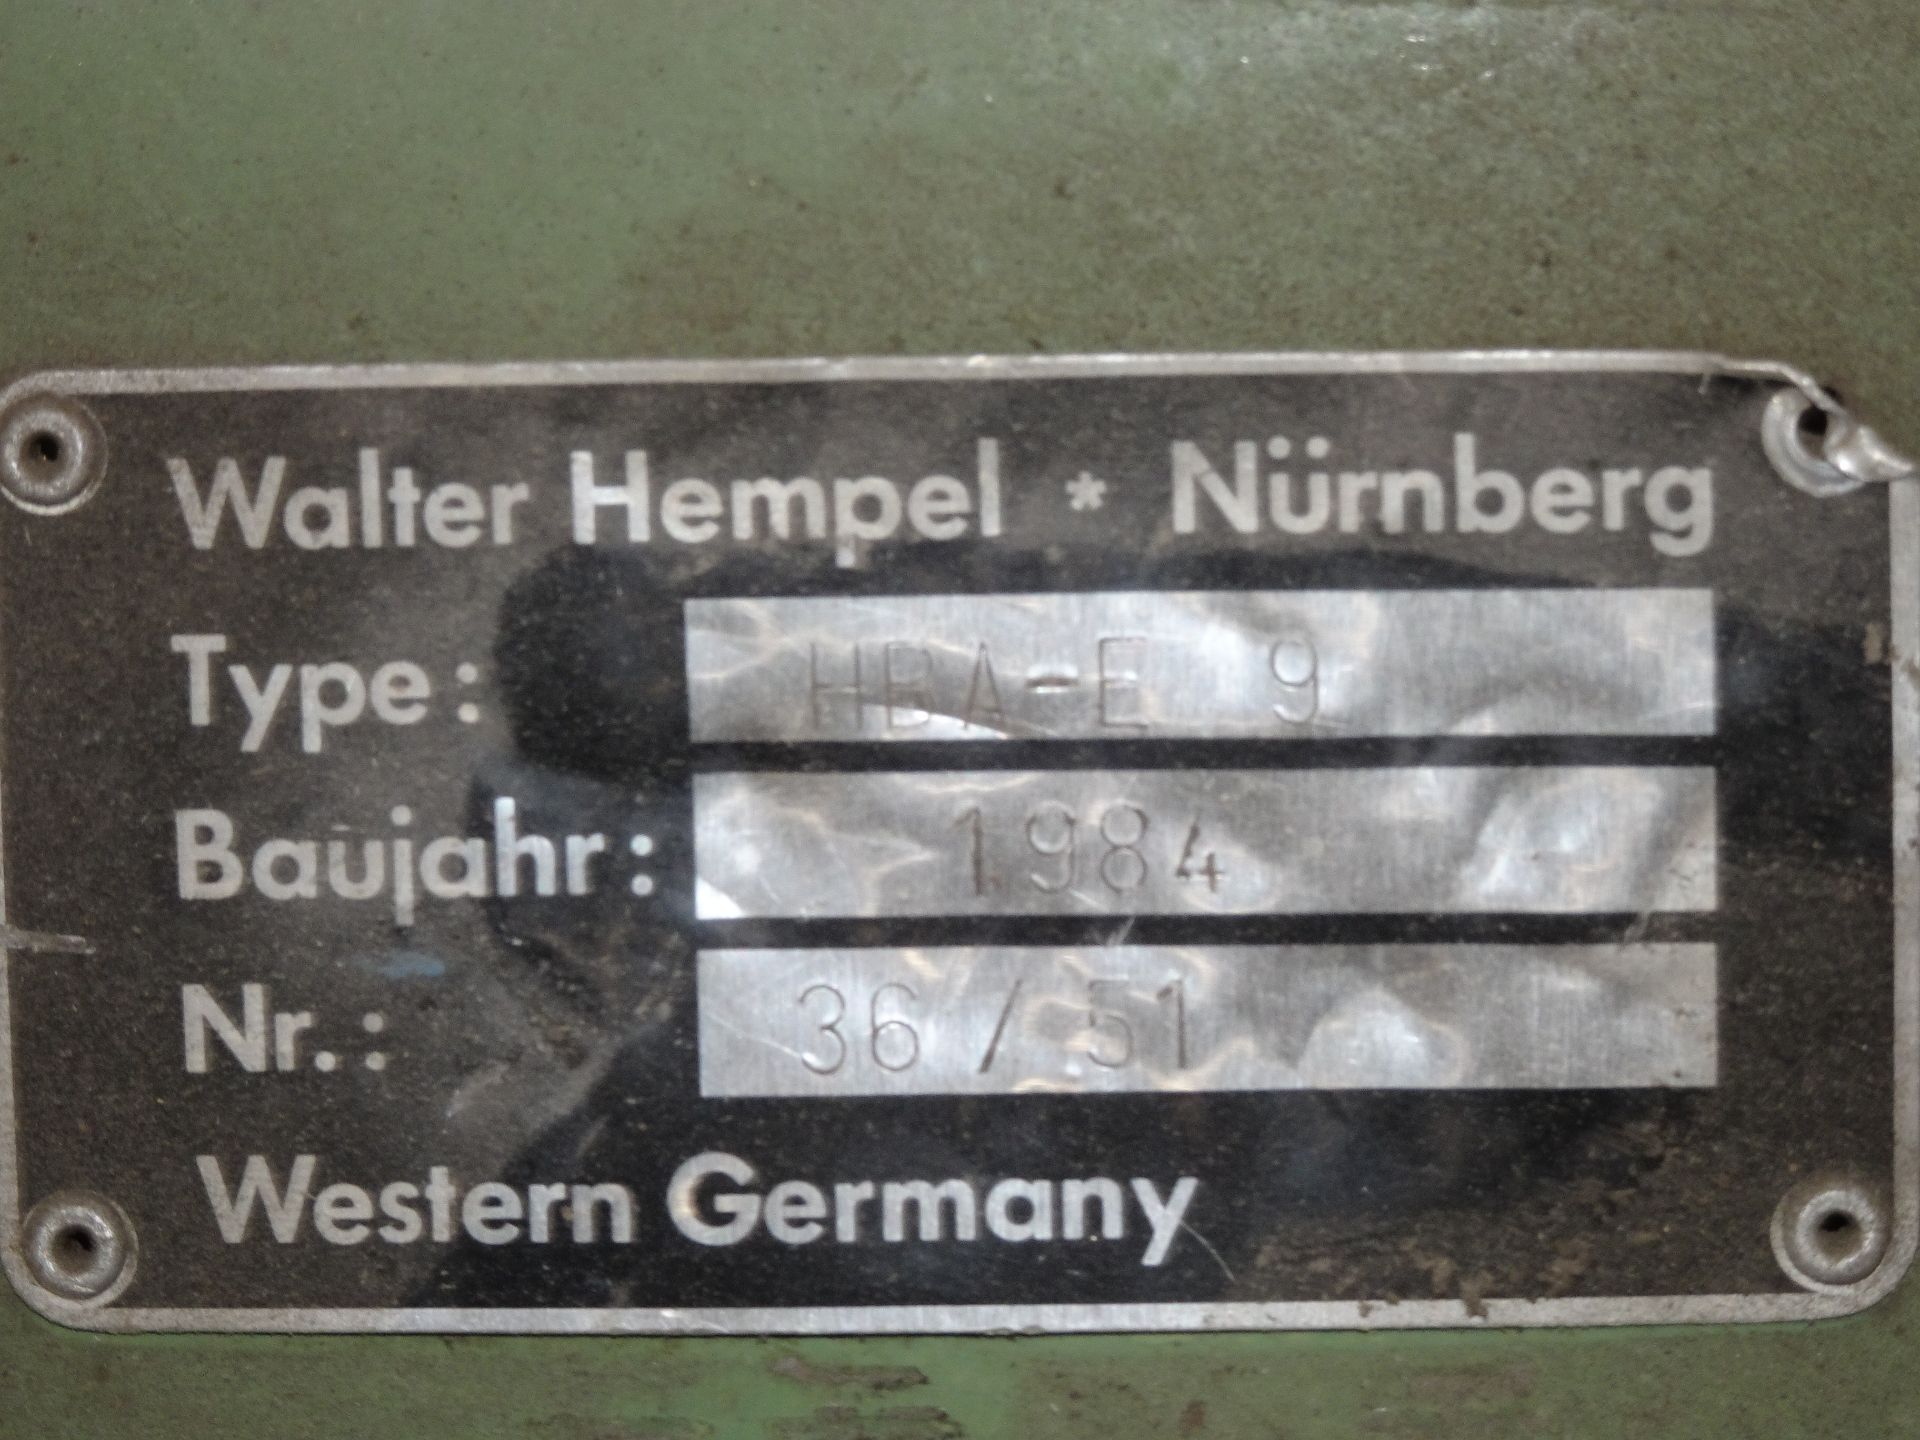 Walter Hempel Nurnberg Model HBAE-9 Wood Plug Drill - Image 3 of 3